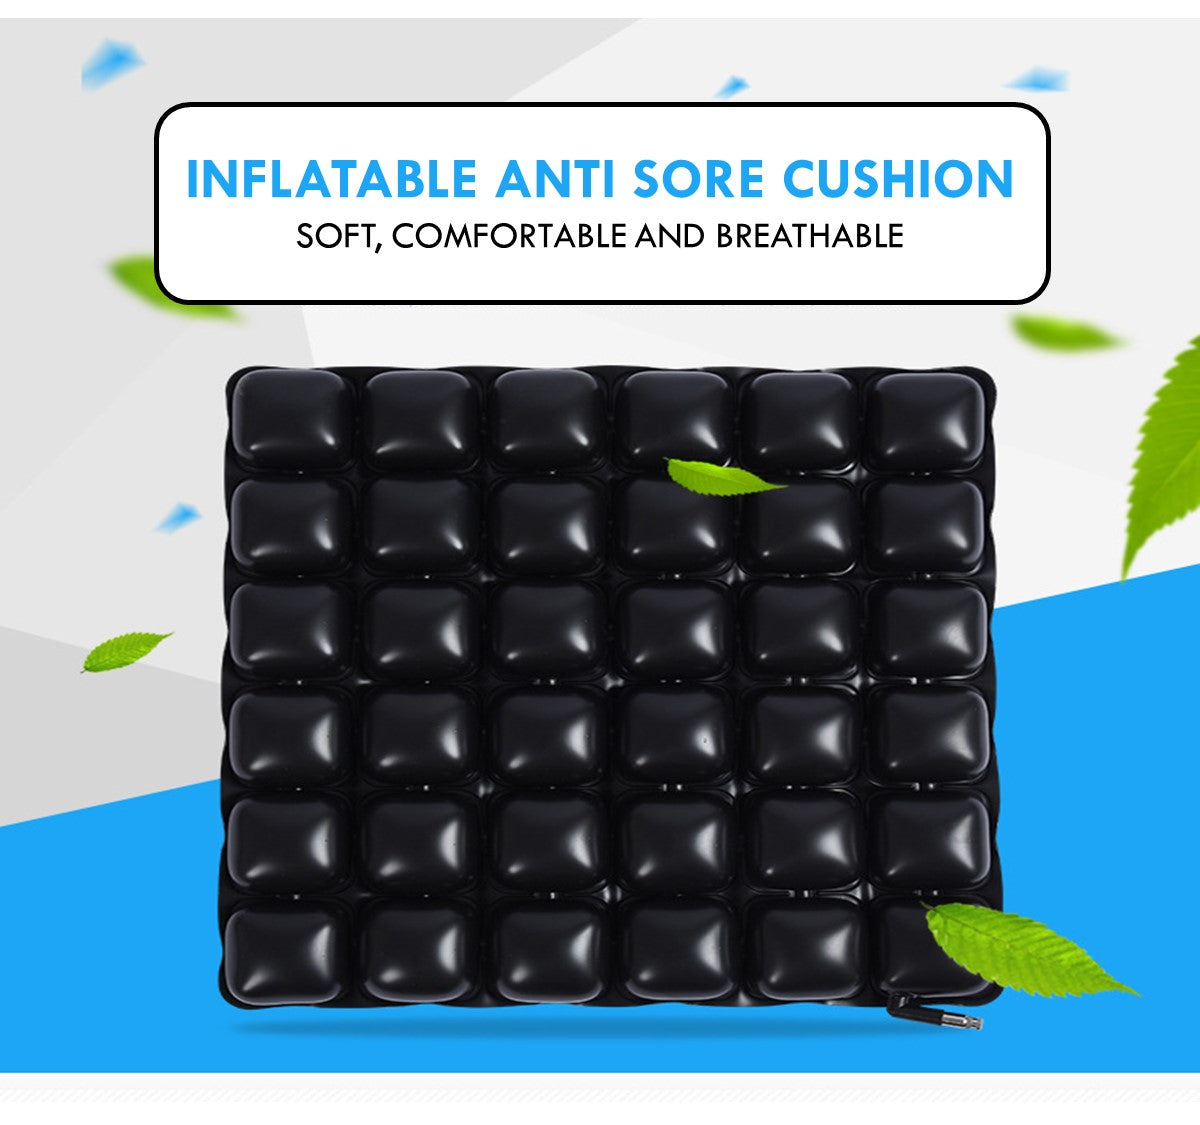 Inflatable Anti Sore Cushion